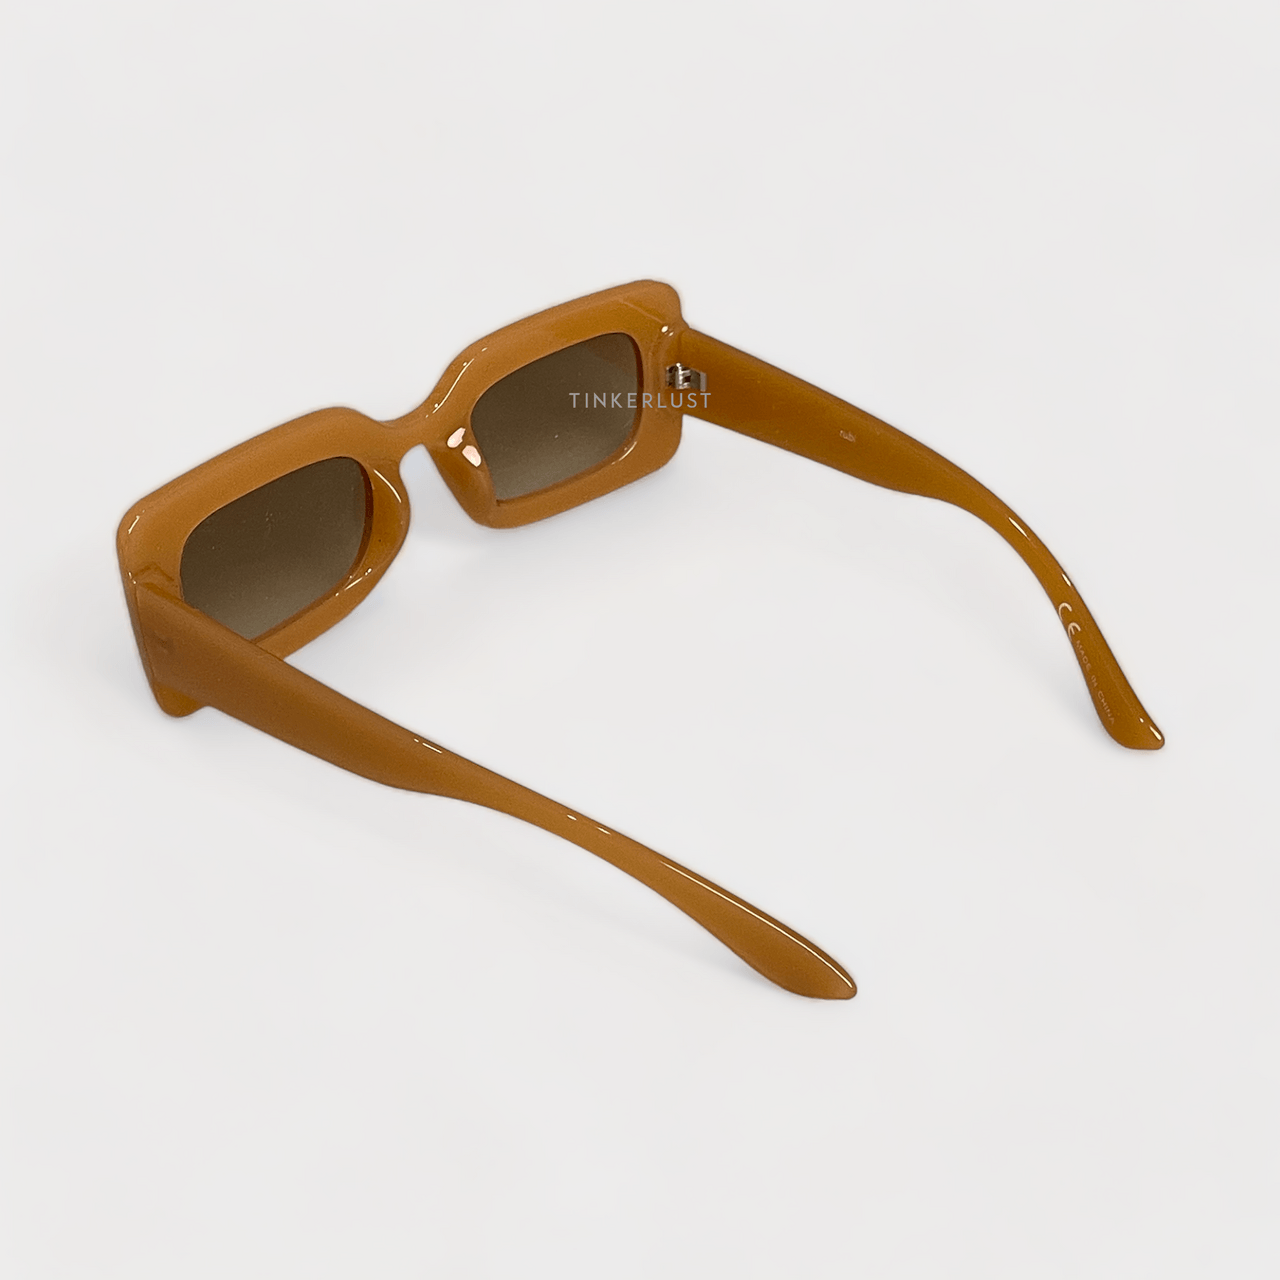 Rubi Gigi Square Light Brown Sunglasses